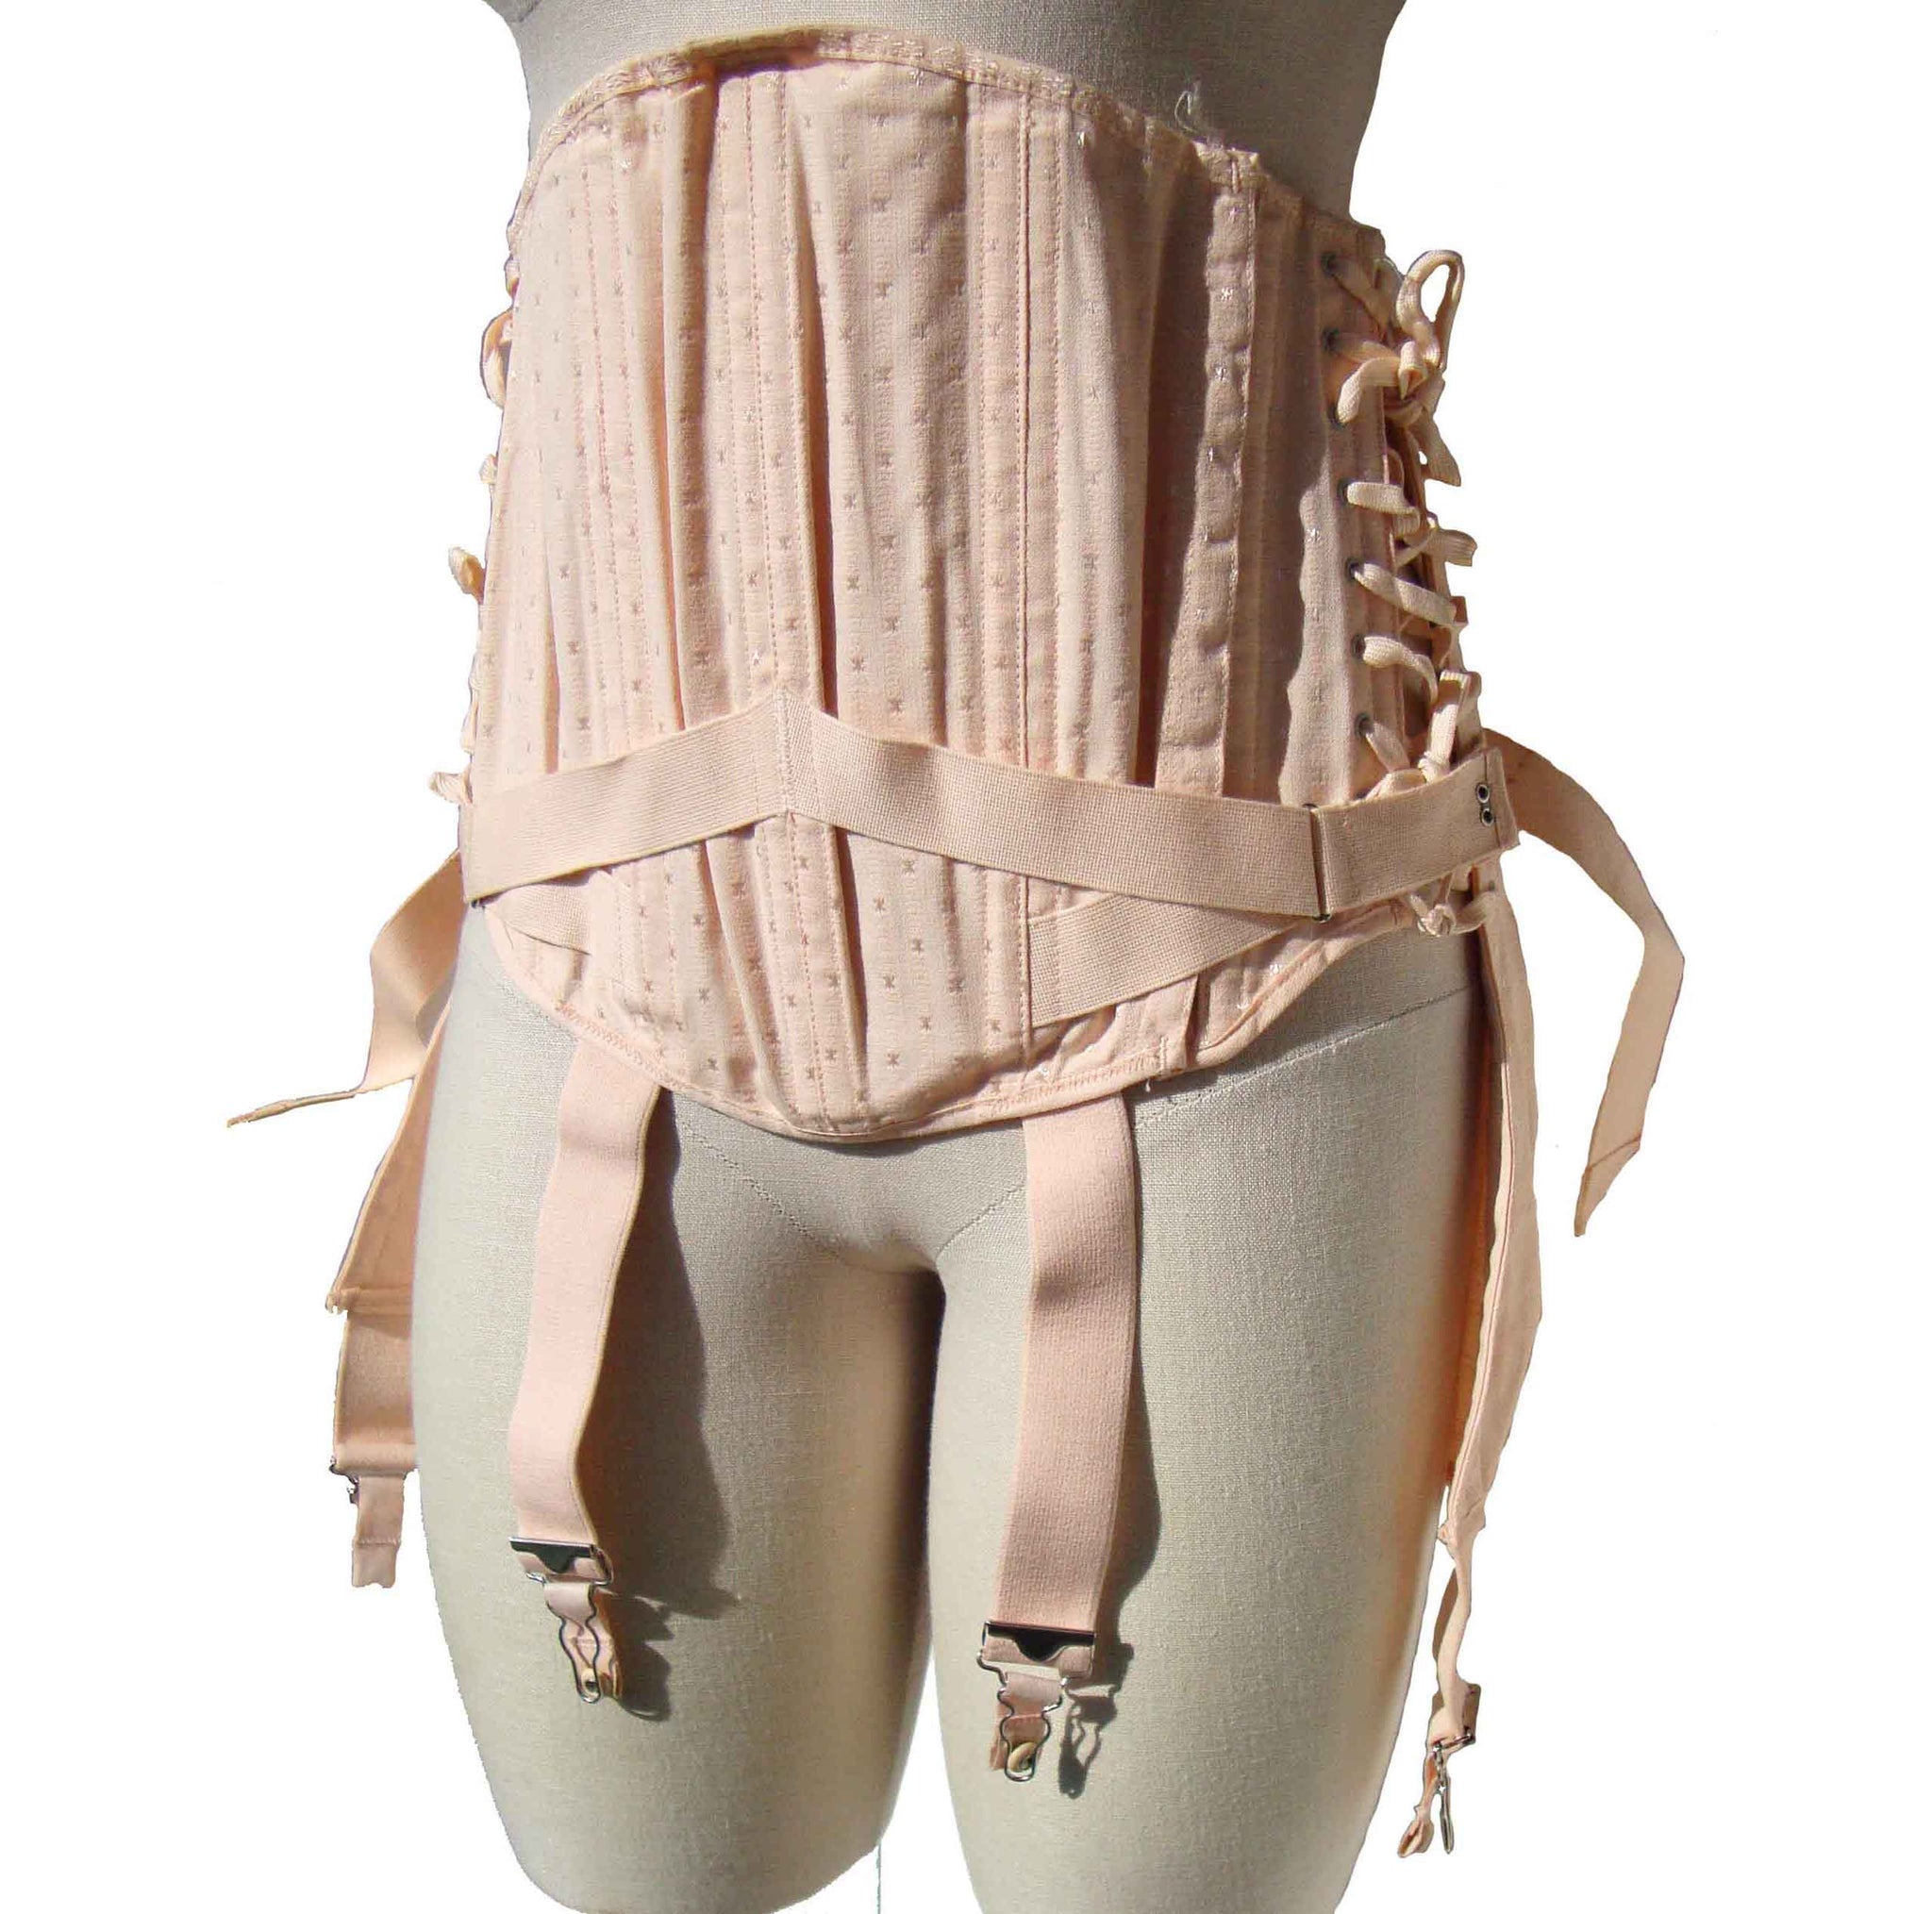 Women Vintage Corset Girdle Garters Elastic Lace Up Underbust